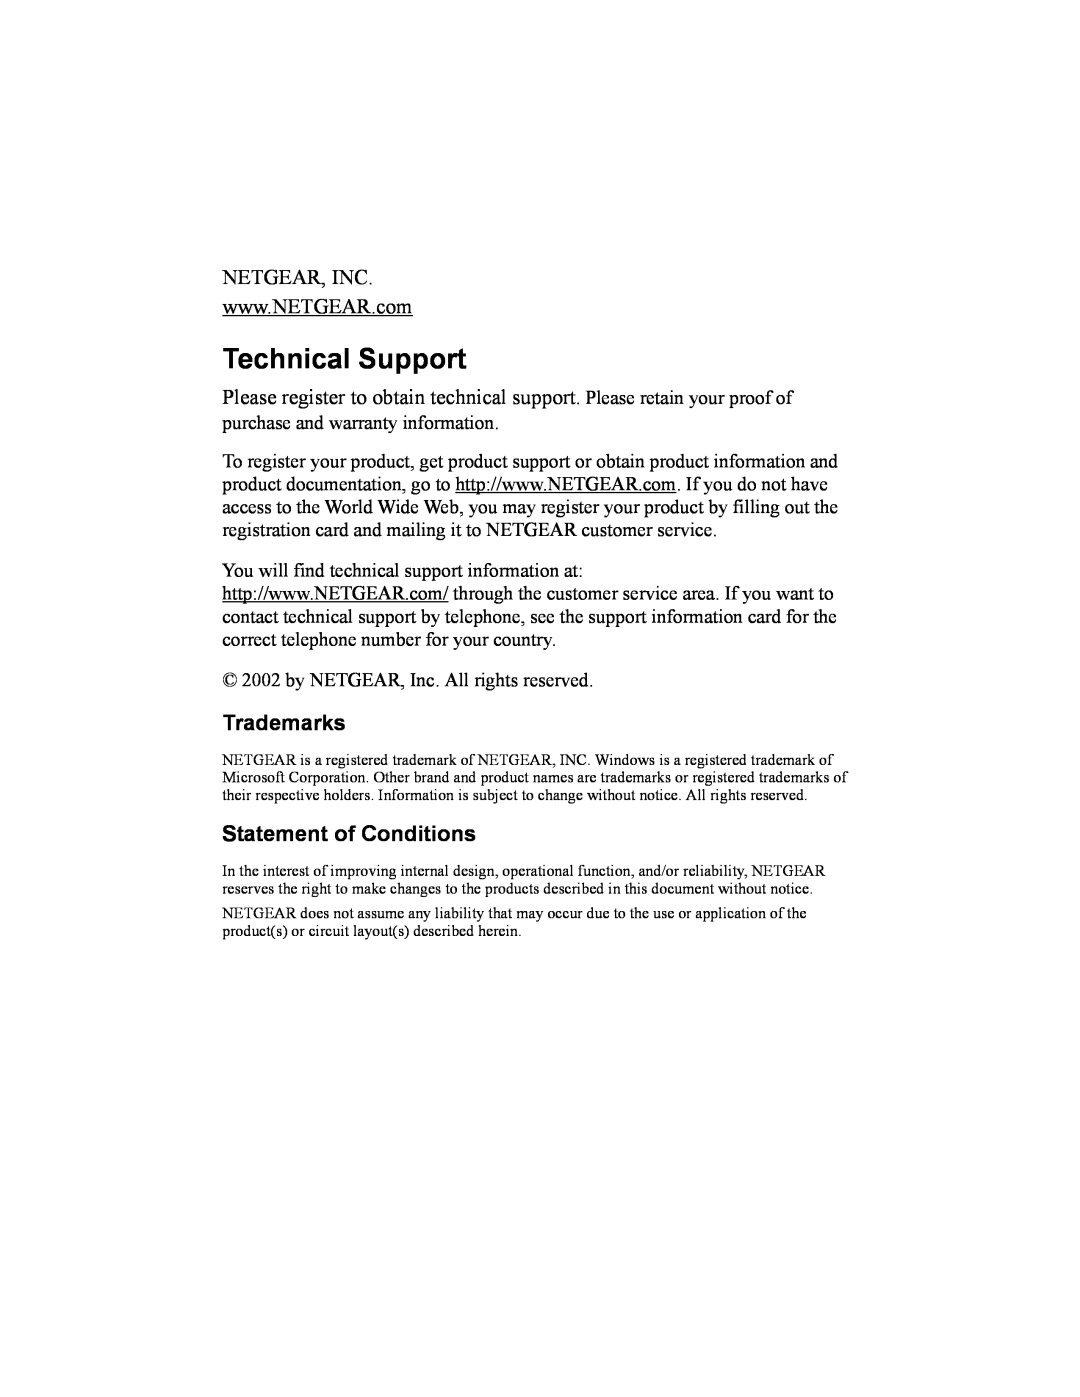 NETGEAR WAB102 manual Netgear, Inc, Technical Support, Trademarks, Statement of Conditions 